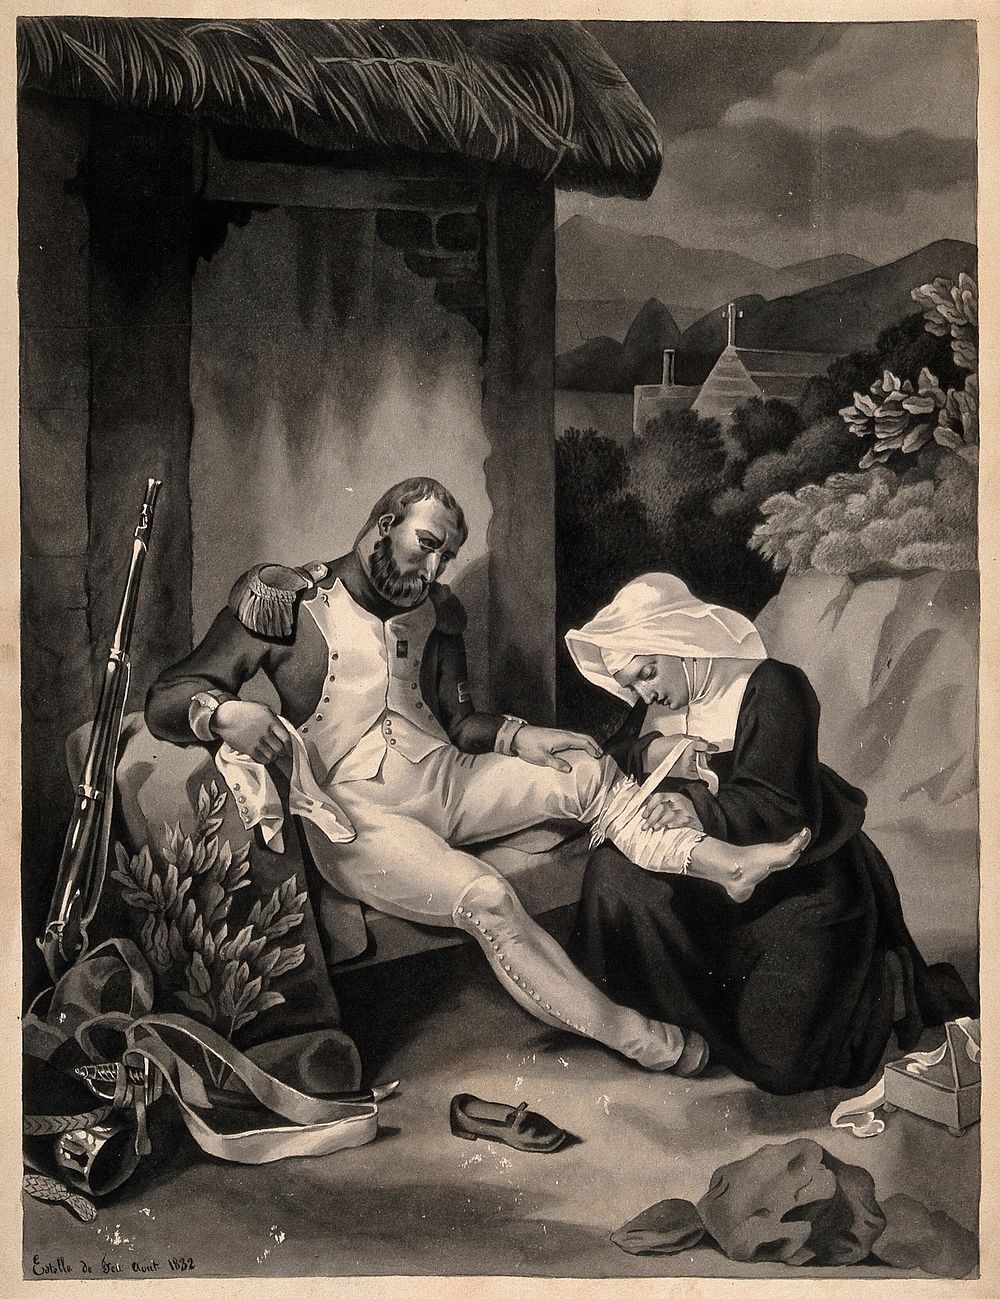 A nun of the order of St. Vincent de Paul dressing a wounded soldier's leg. Wash drawing by E. de Feu, 1832.